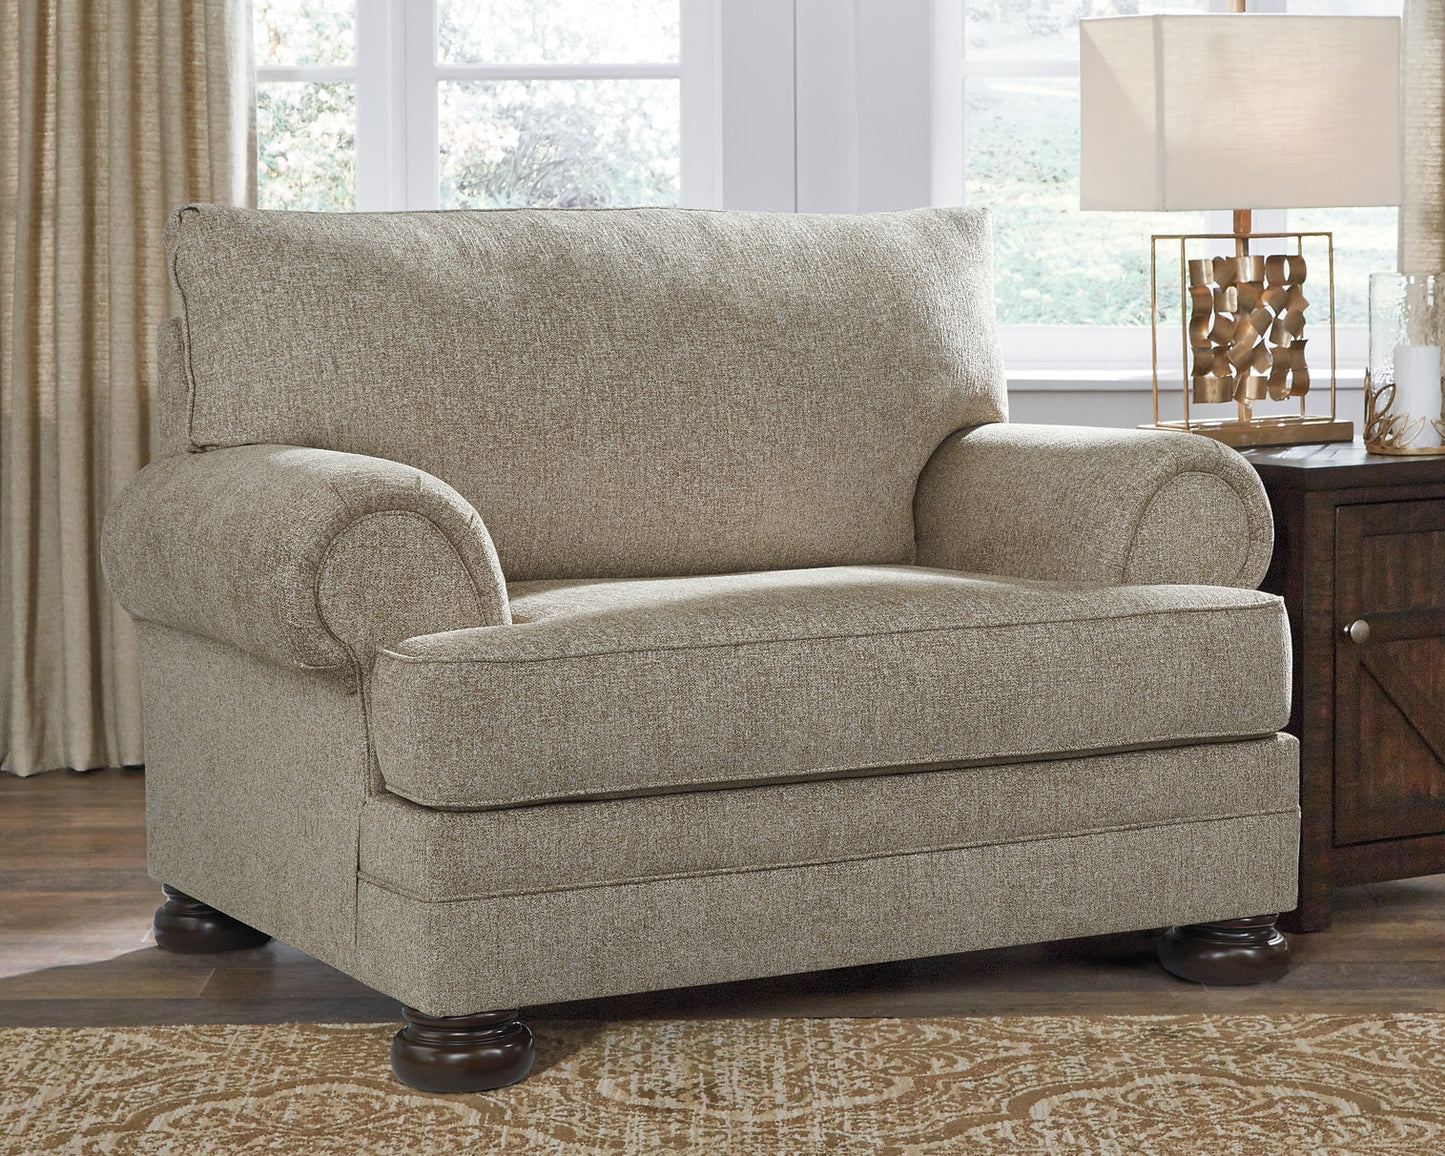 Kananwood Sofa, Loveseat, Chair and Ottoman at Cloud 9 Mattress & Furniture furniture, home furnishing, home decor